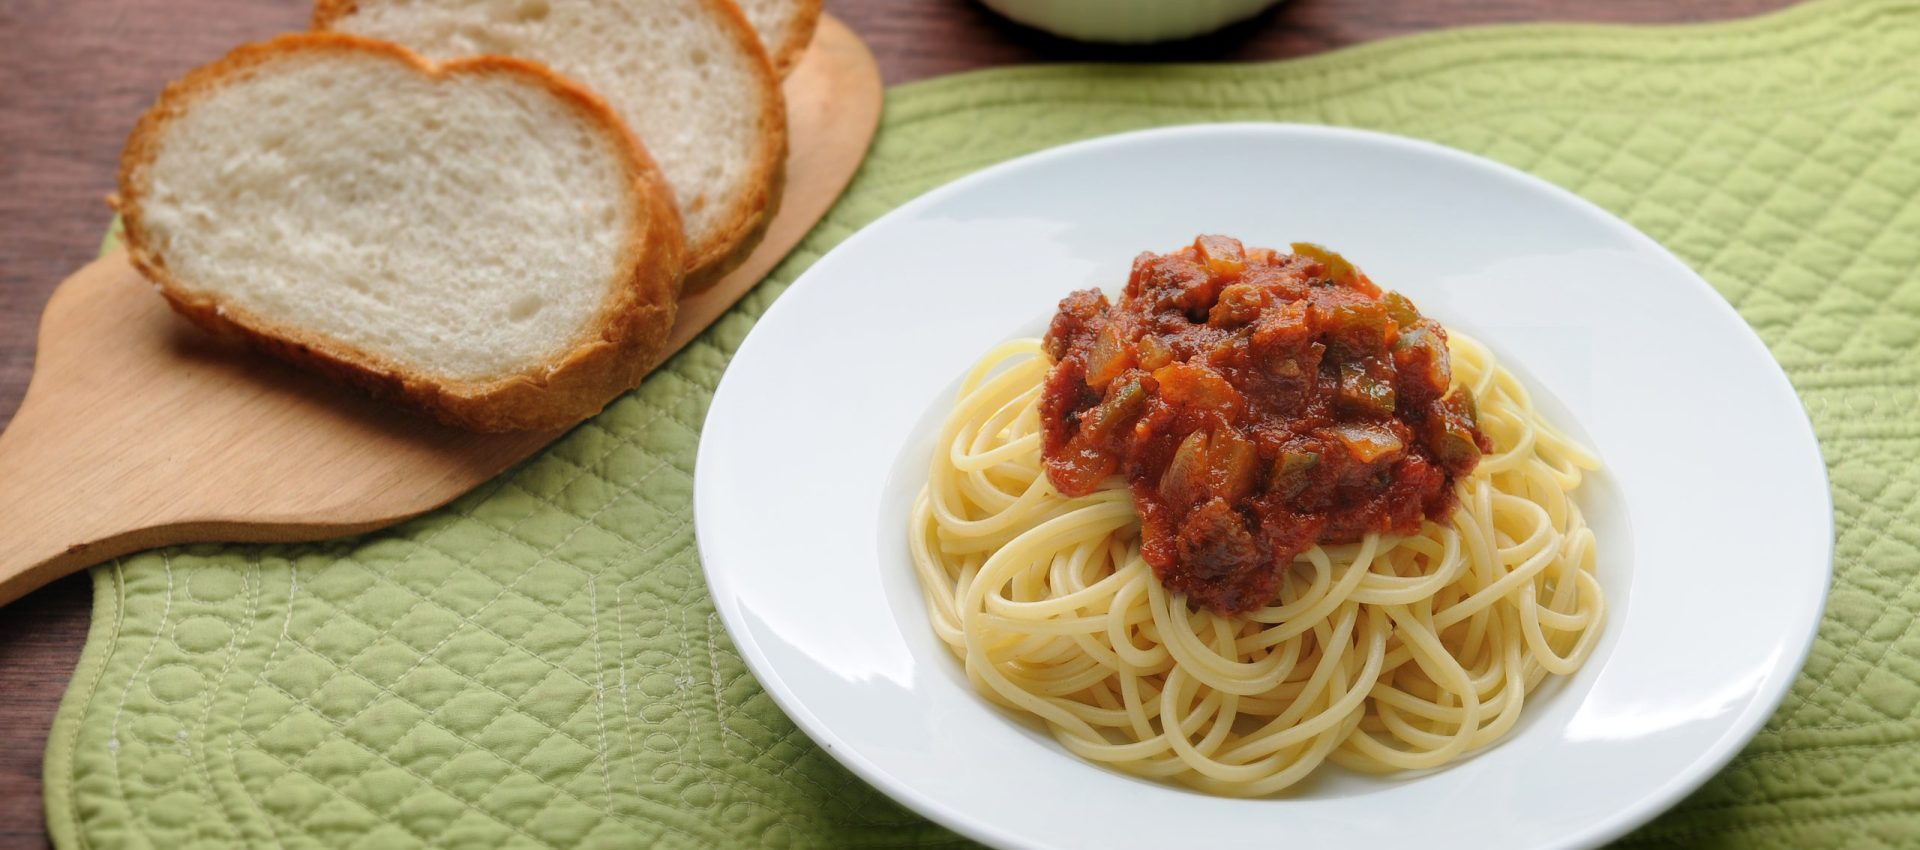 Spaghetti-Classic-Italian-Sauce-HR-scaled-1920x850 Spaghetti with Classic Italian Sauce